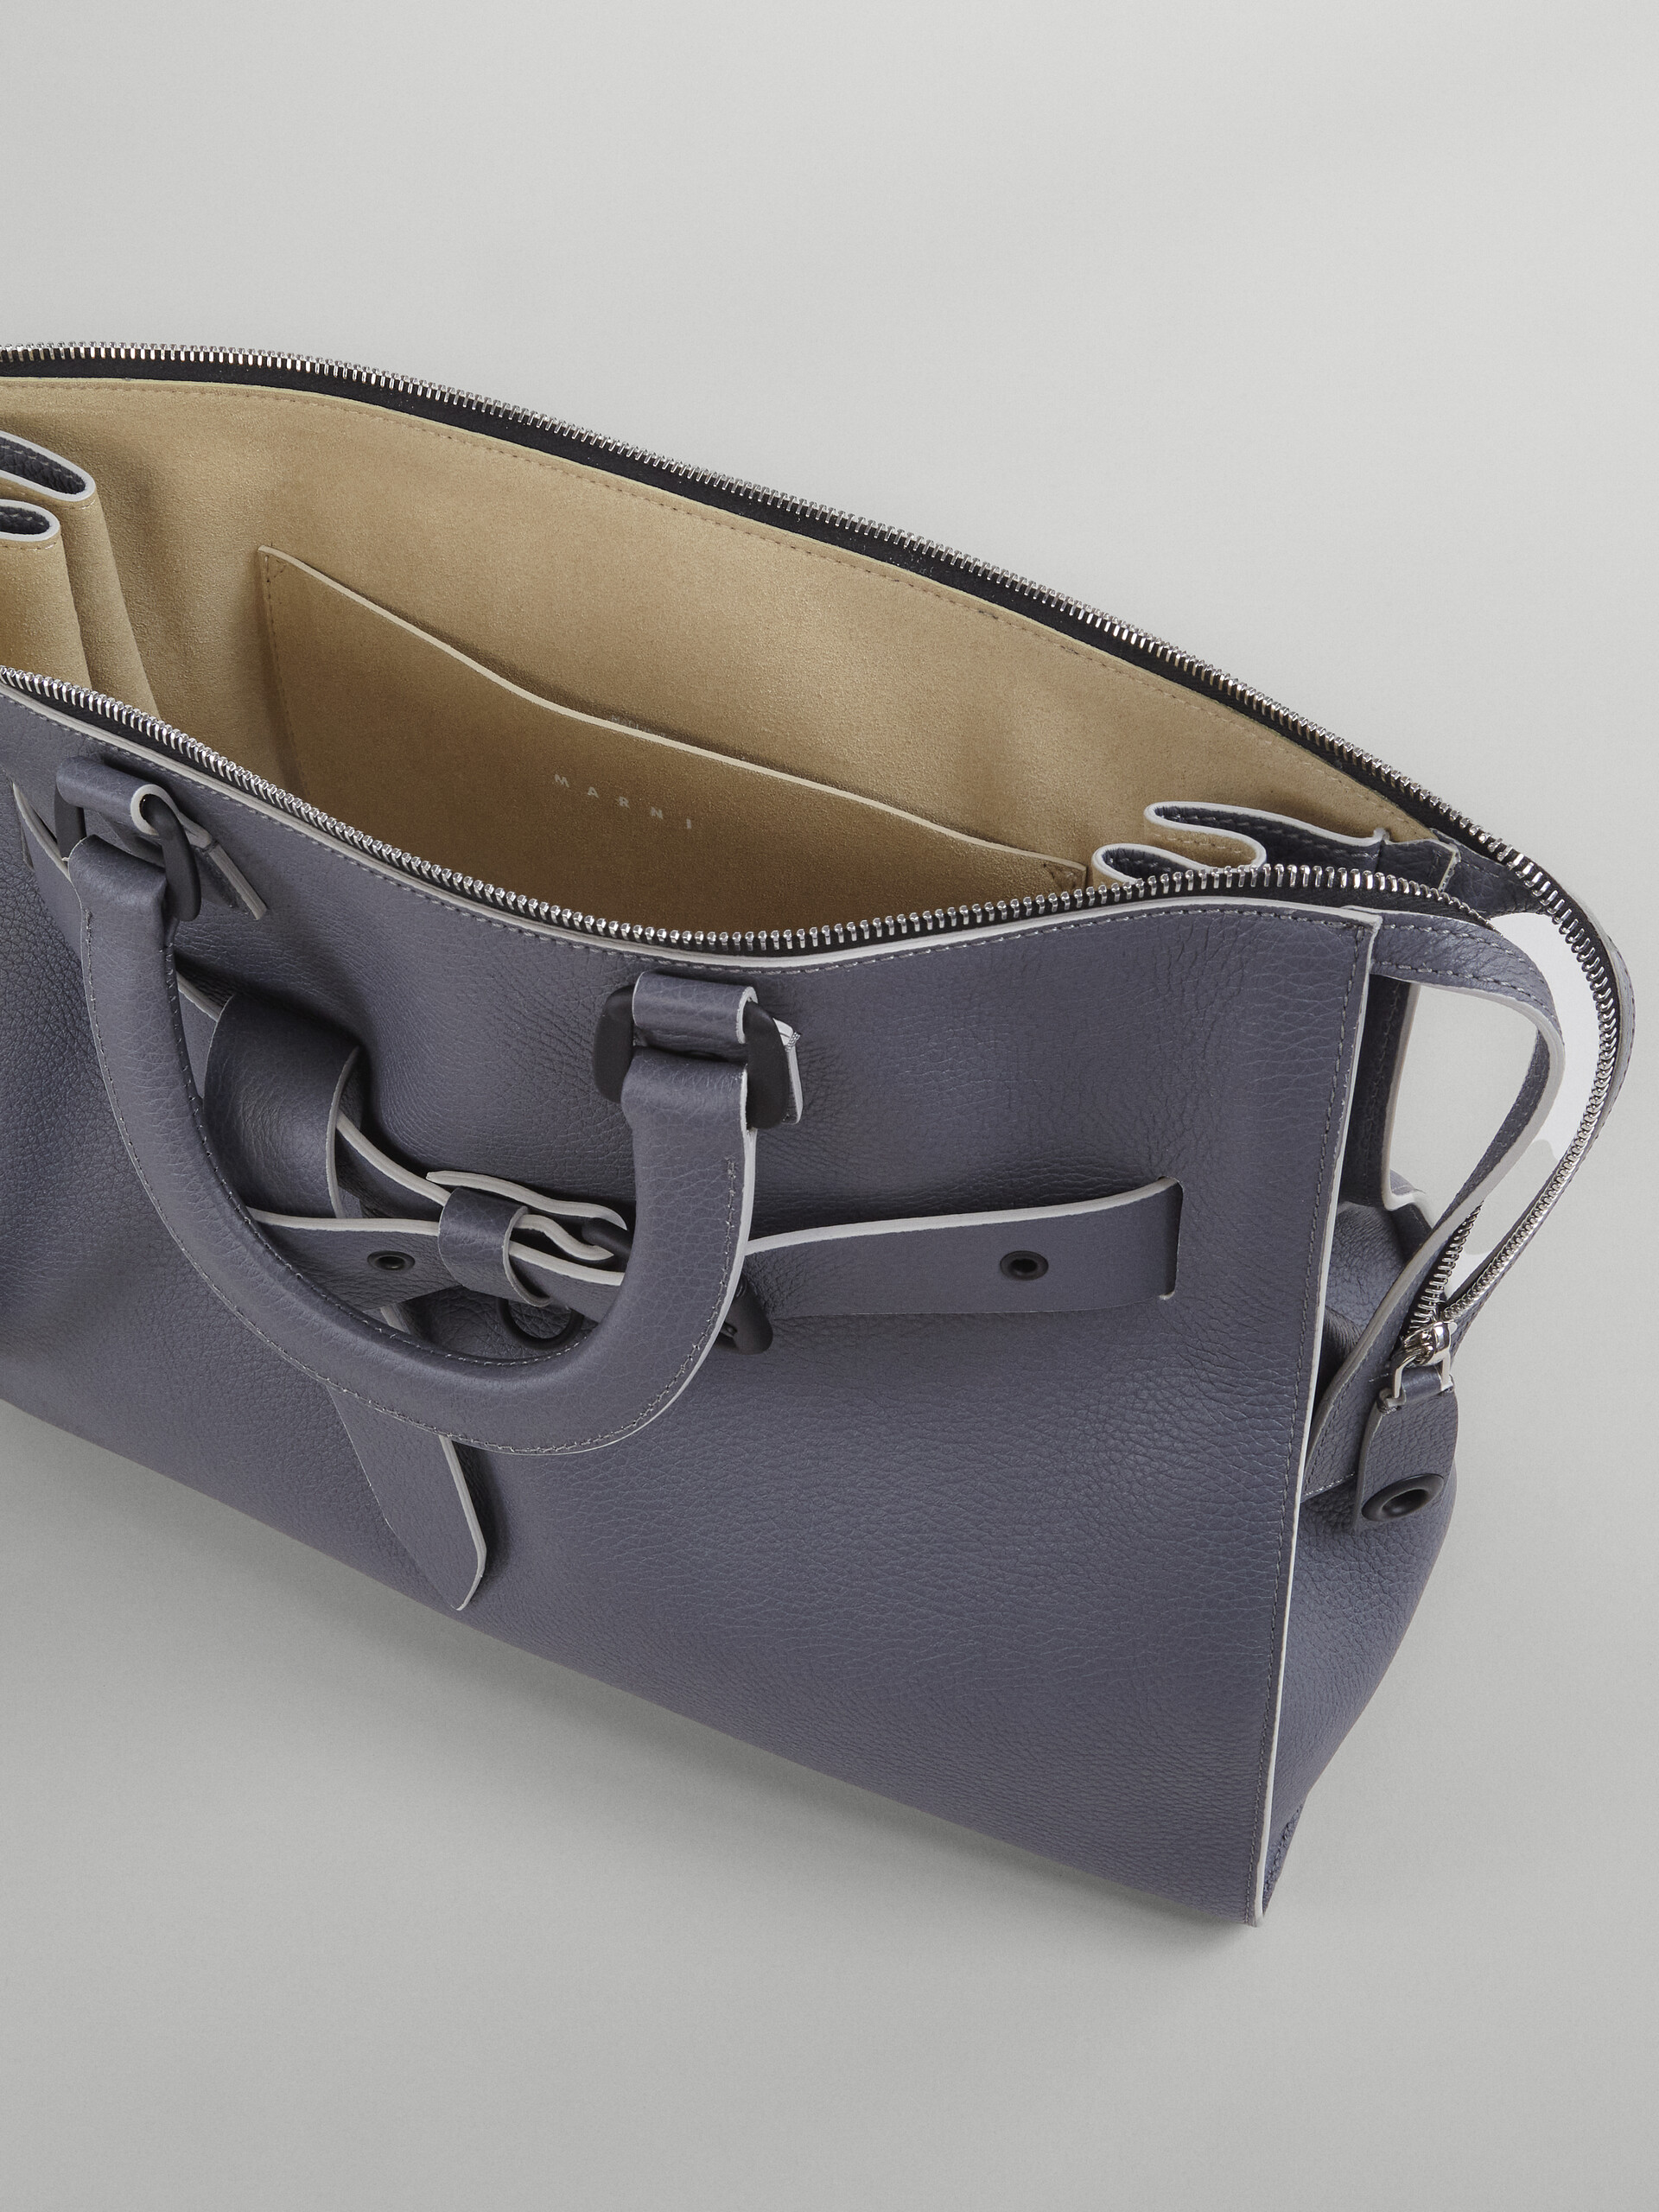 TREASURE bag in grained calf leather - Handbag - Image 5